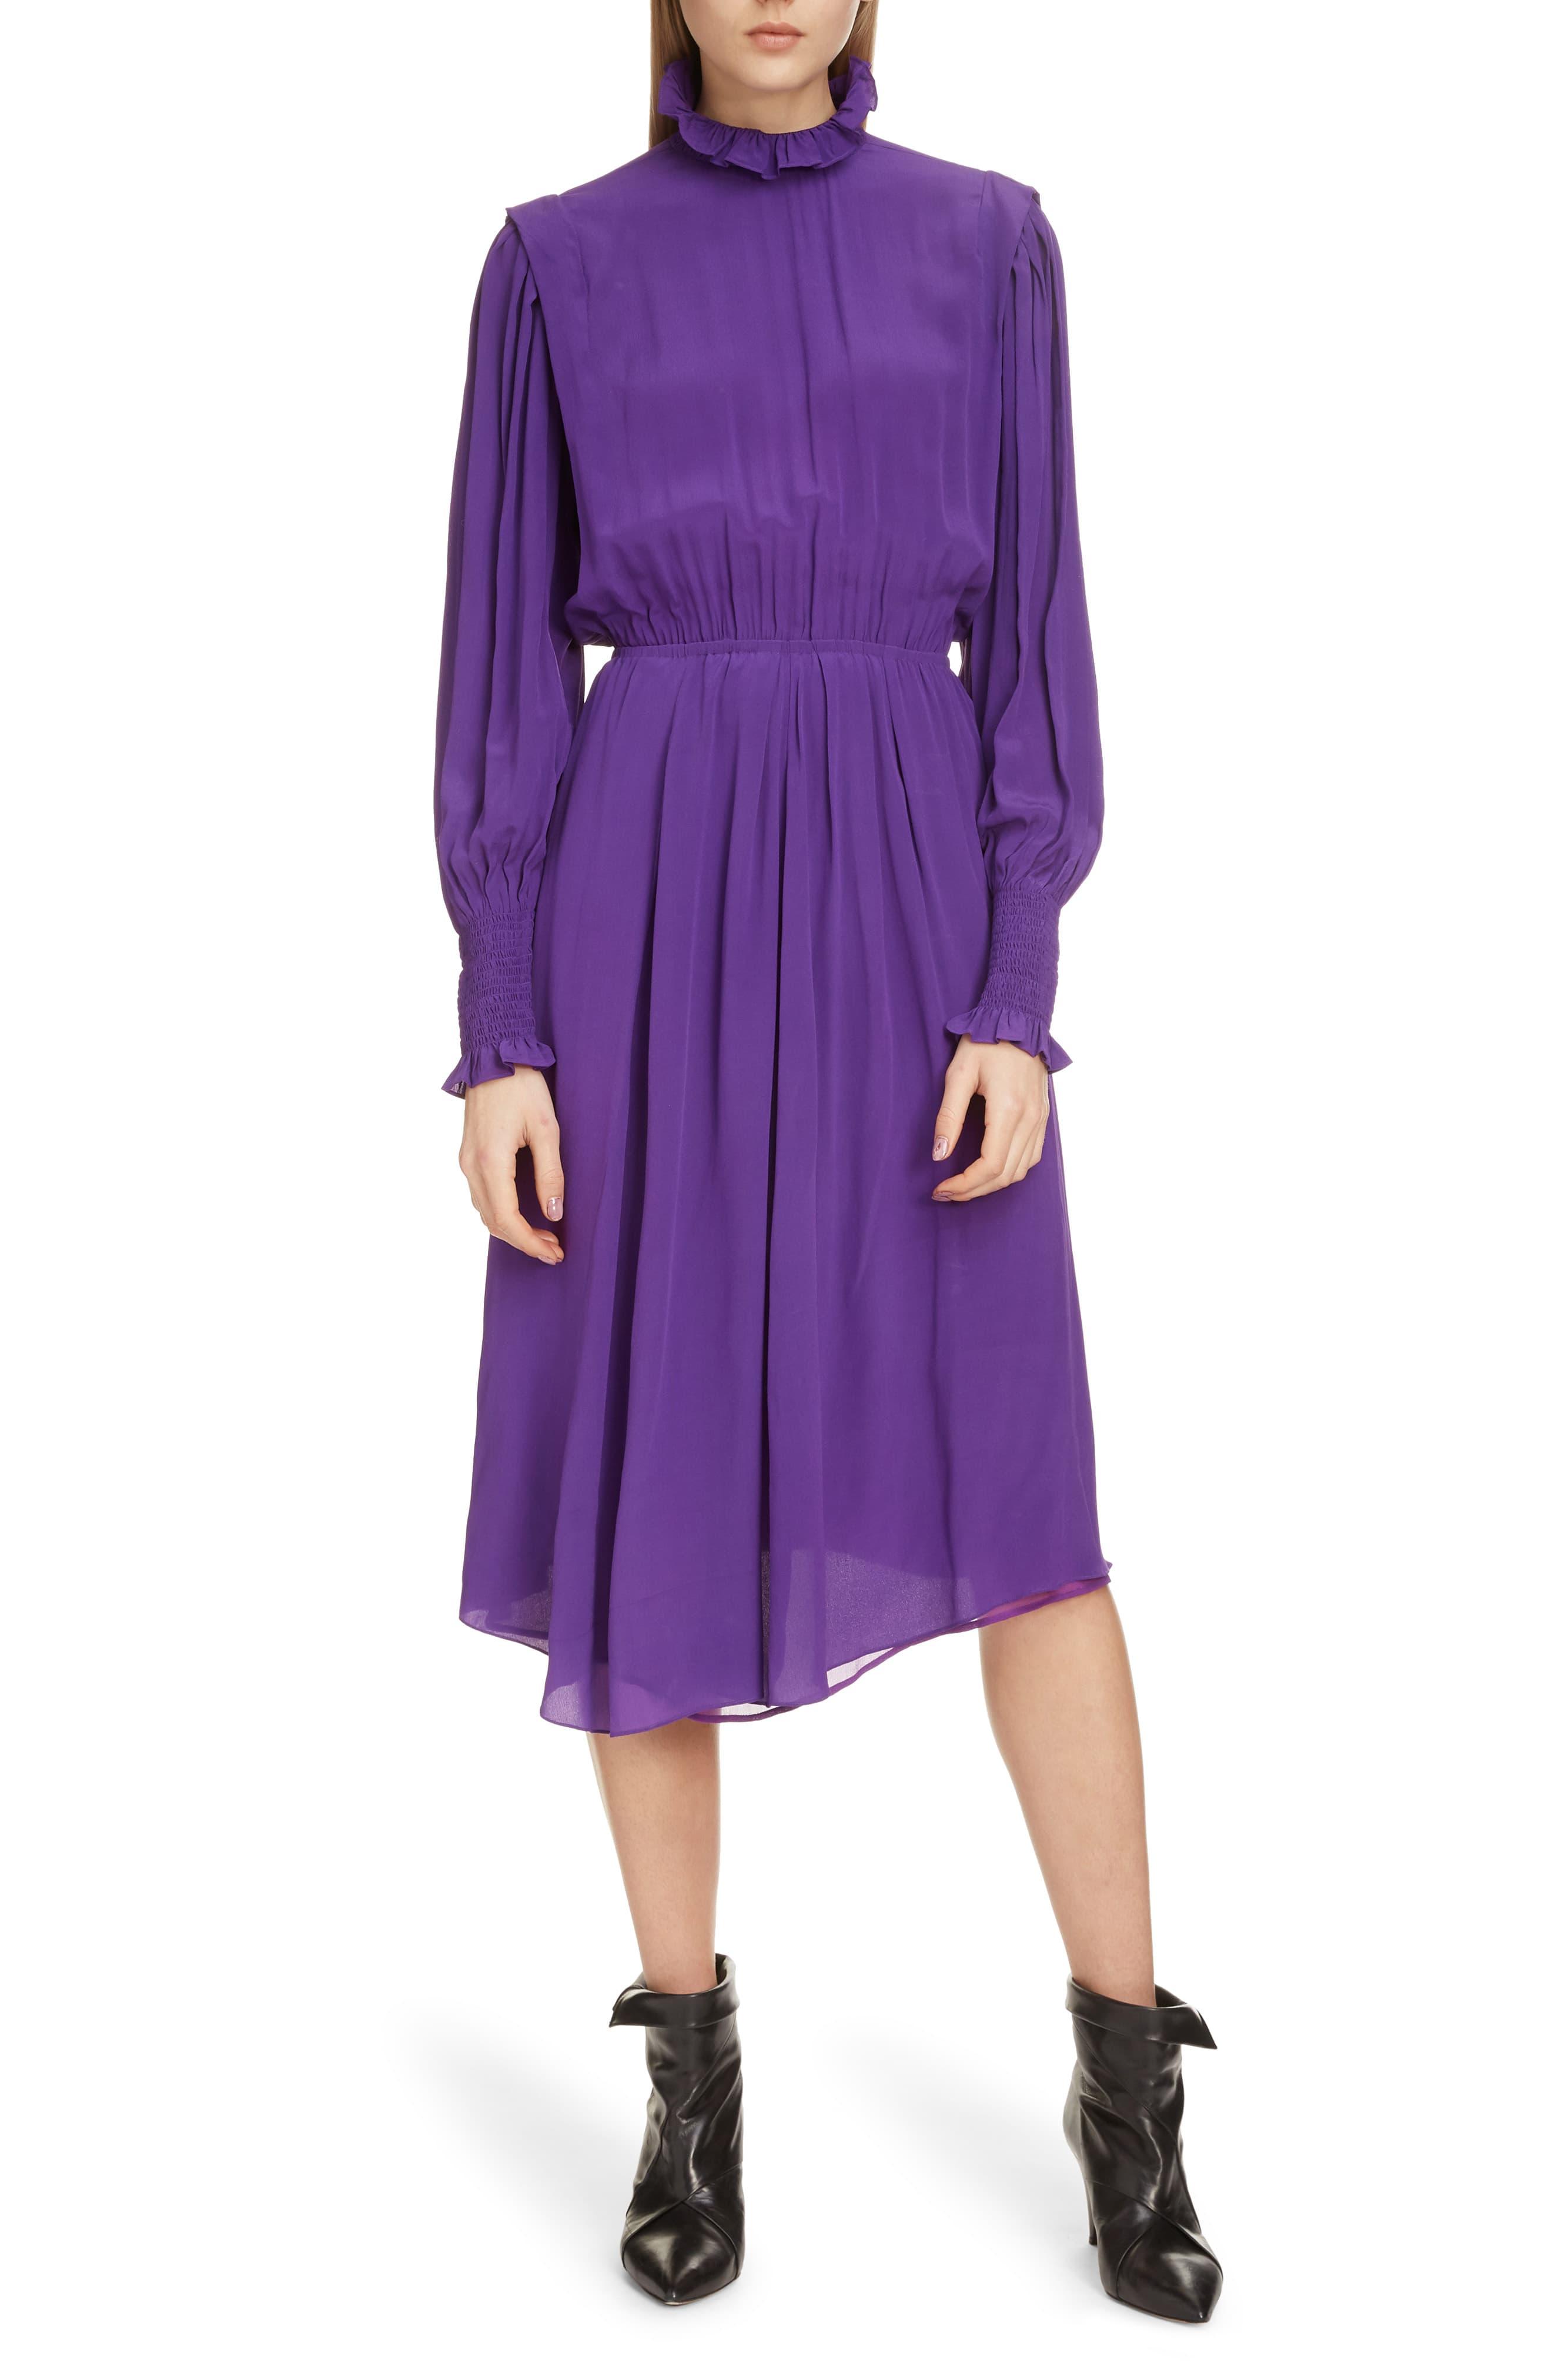 Étoile Isabel Marant Yescott Asymmetrical Hem Dress in Purple - Lyst